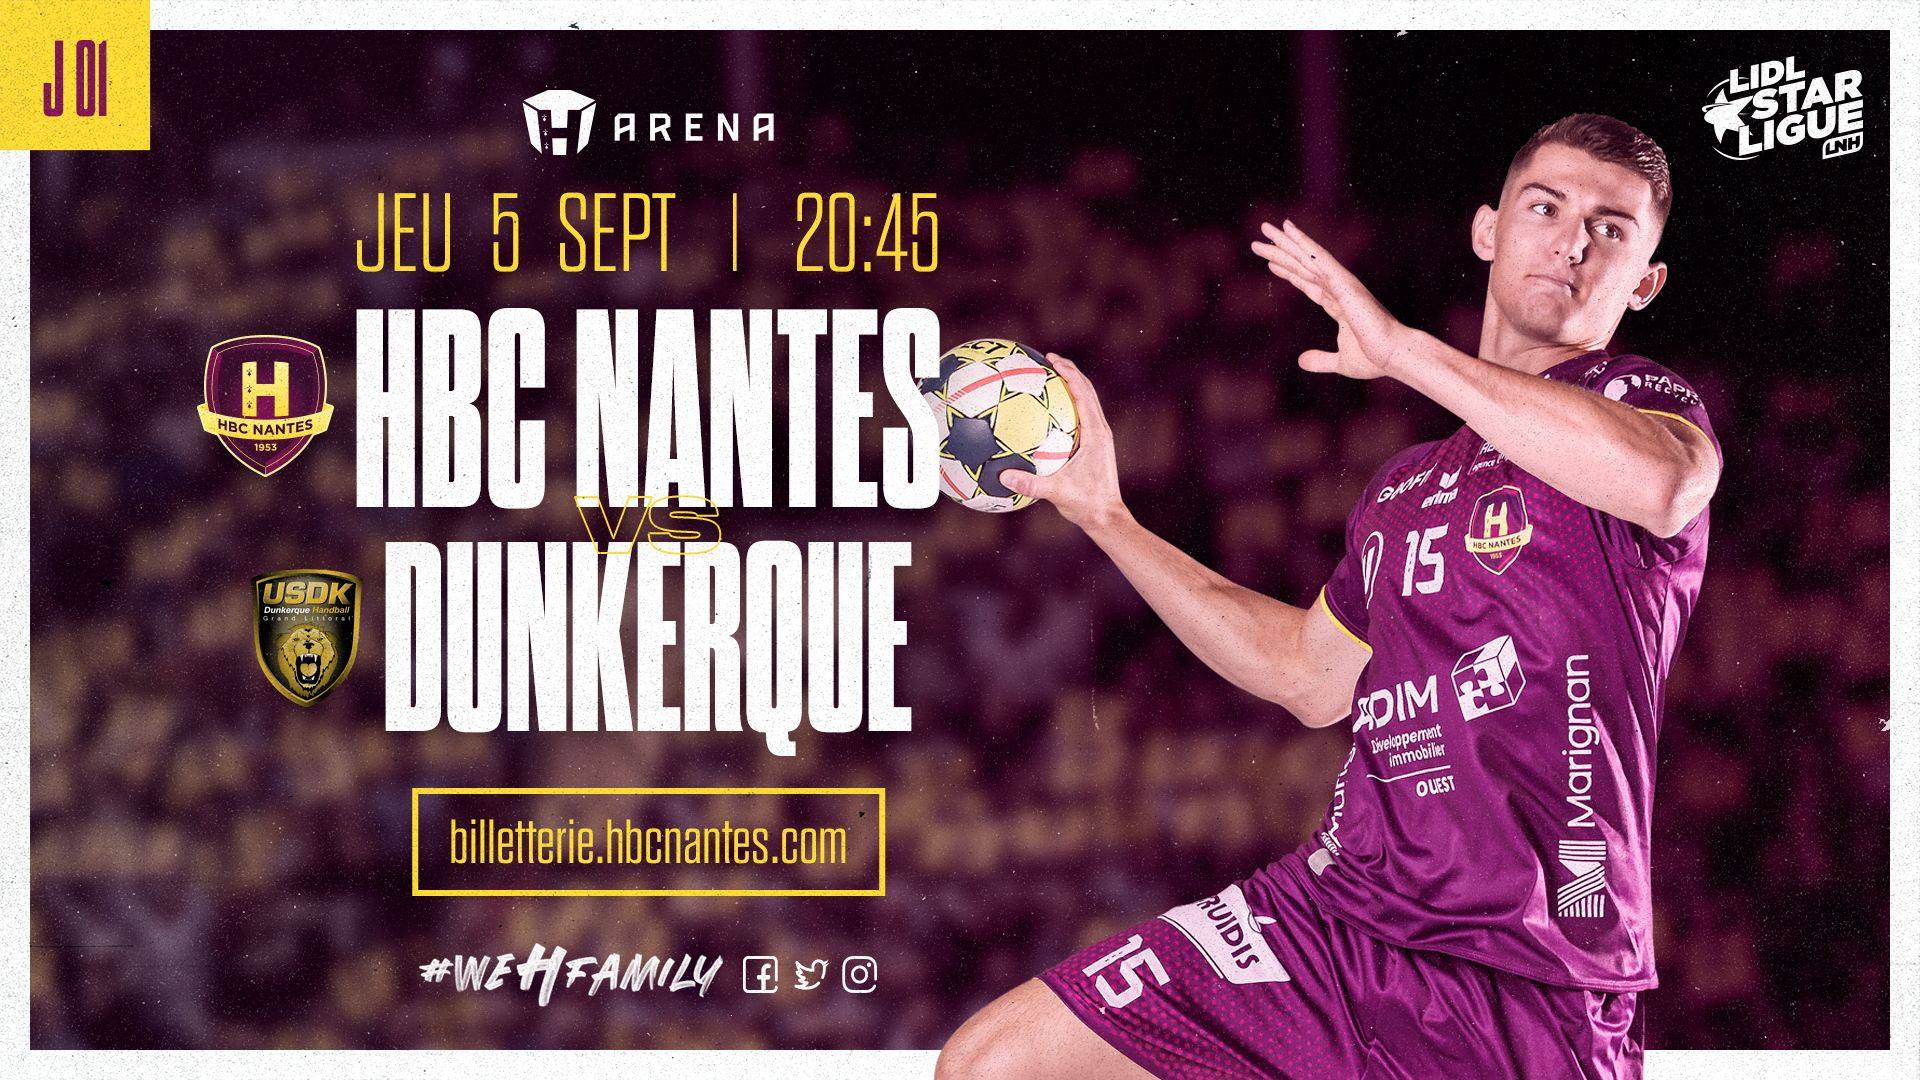 HBC Nantes - Dunkerque : Infos pratiques